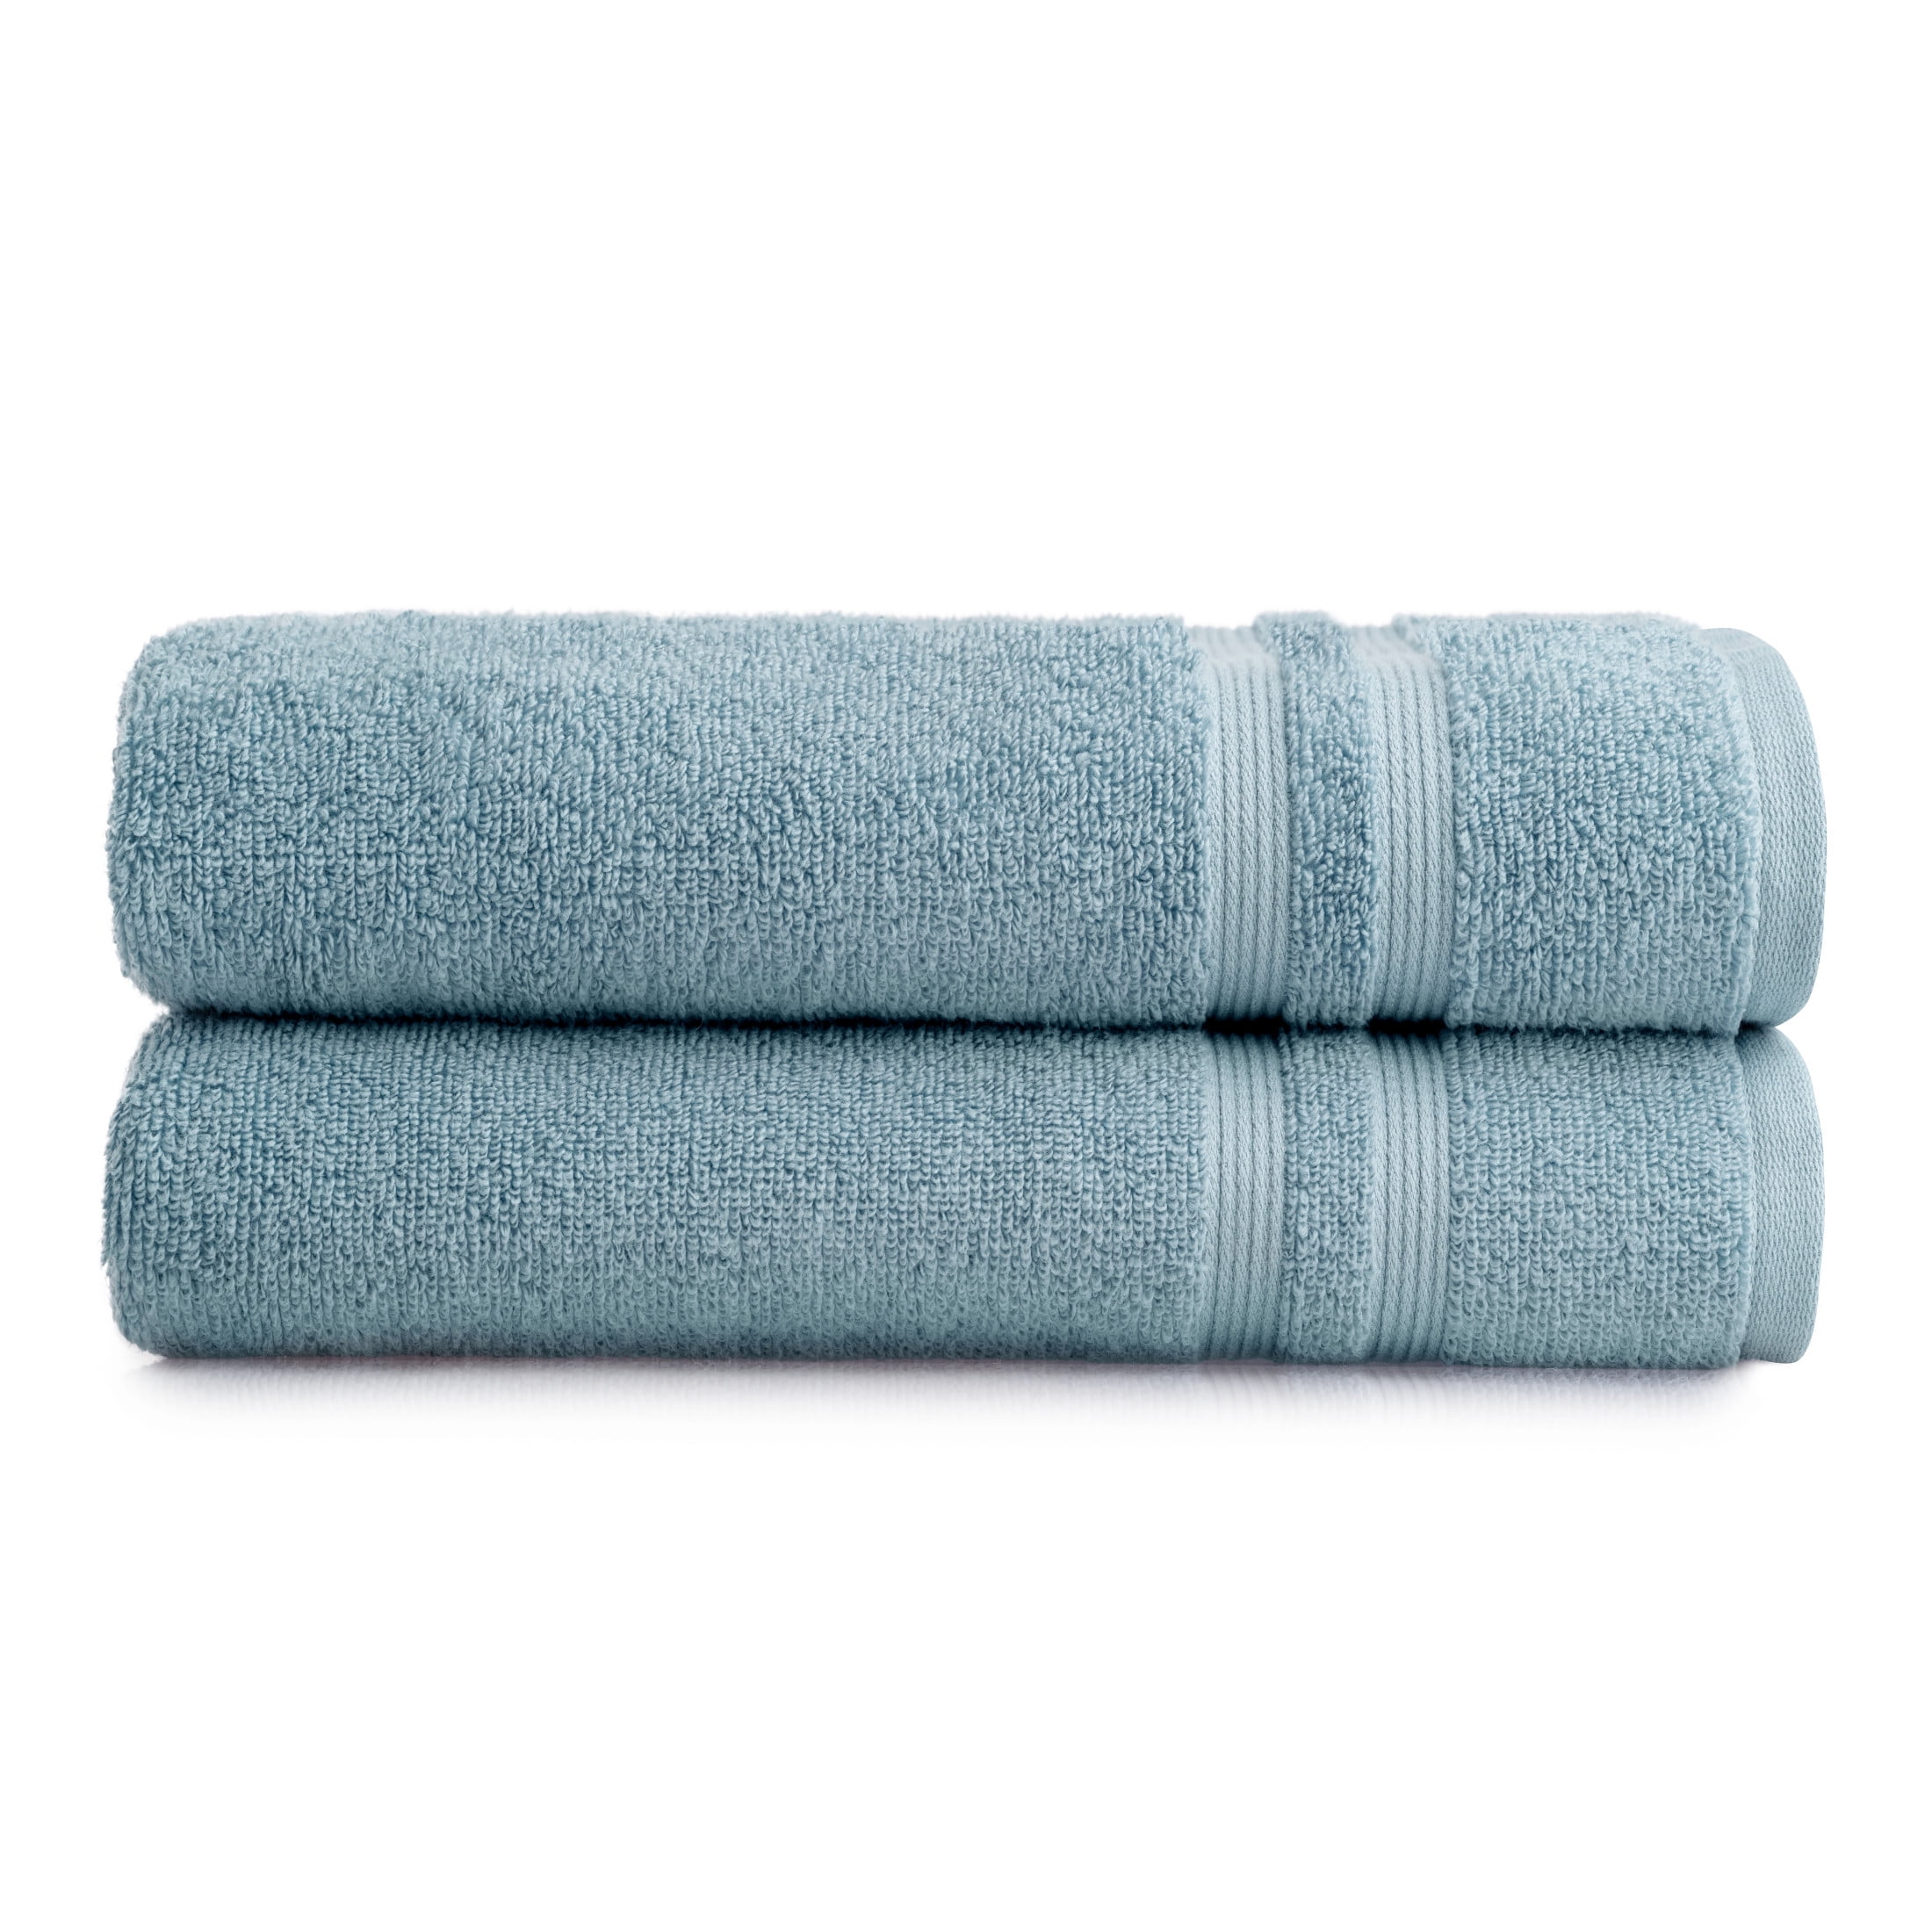 MYLSMPLE Luxury Microfiber Bath Towel Bath Sheet Beach Spa Extra Large Soft  Absorbent Towel (36 Inch X 72 Inch, Light Blue)